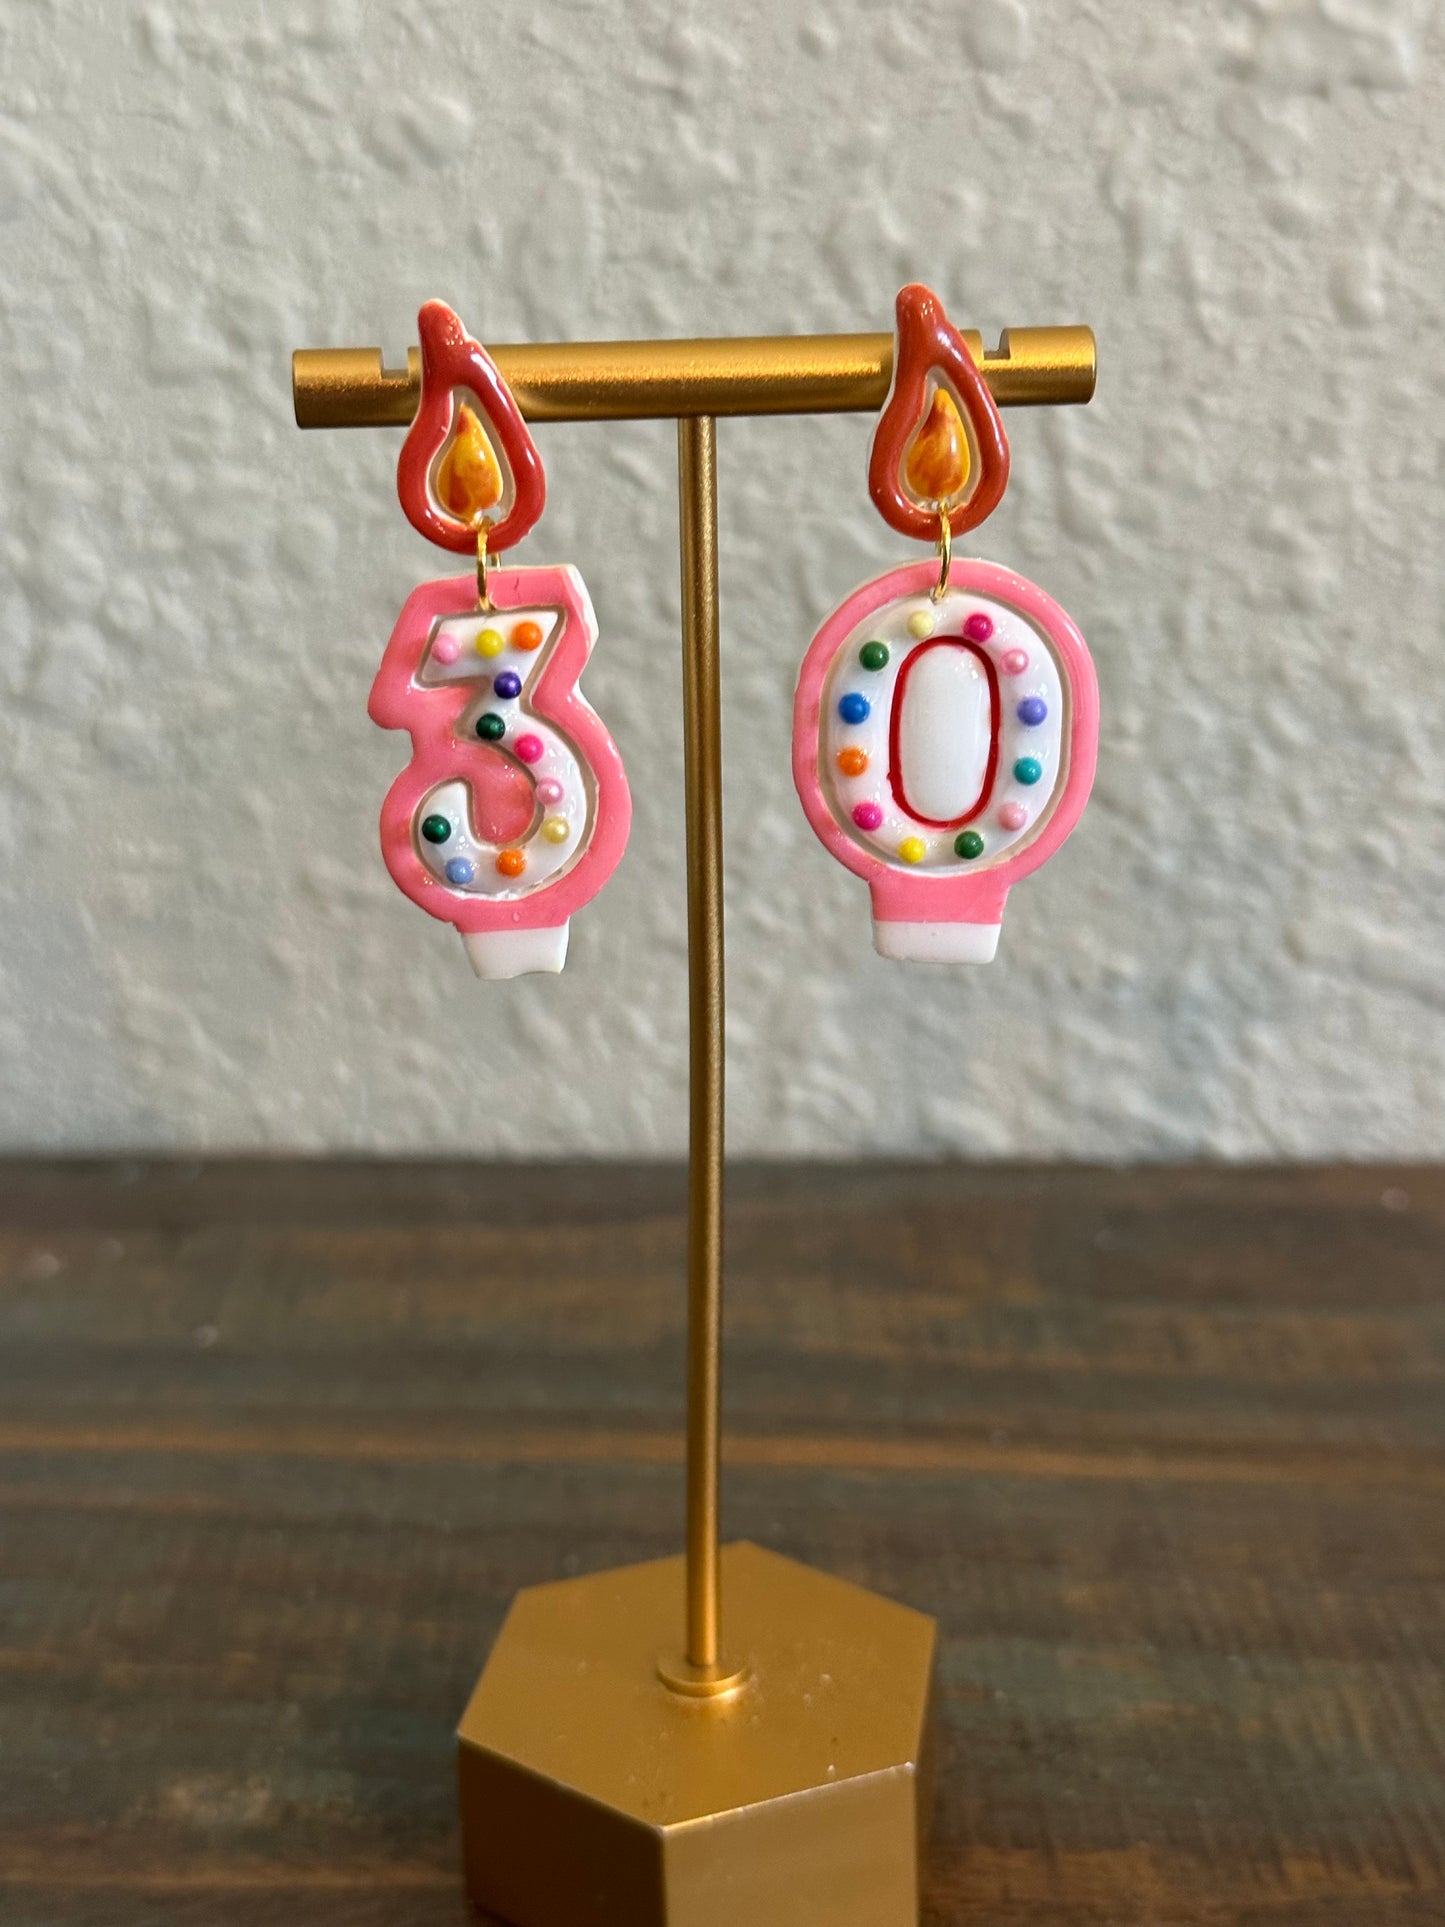 Birthday Candle Earrings